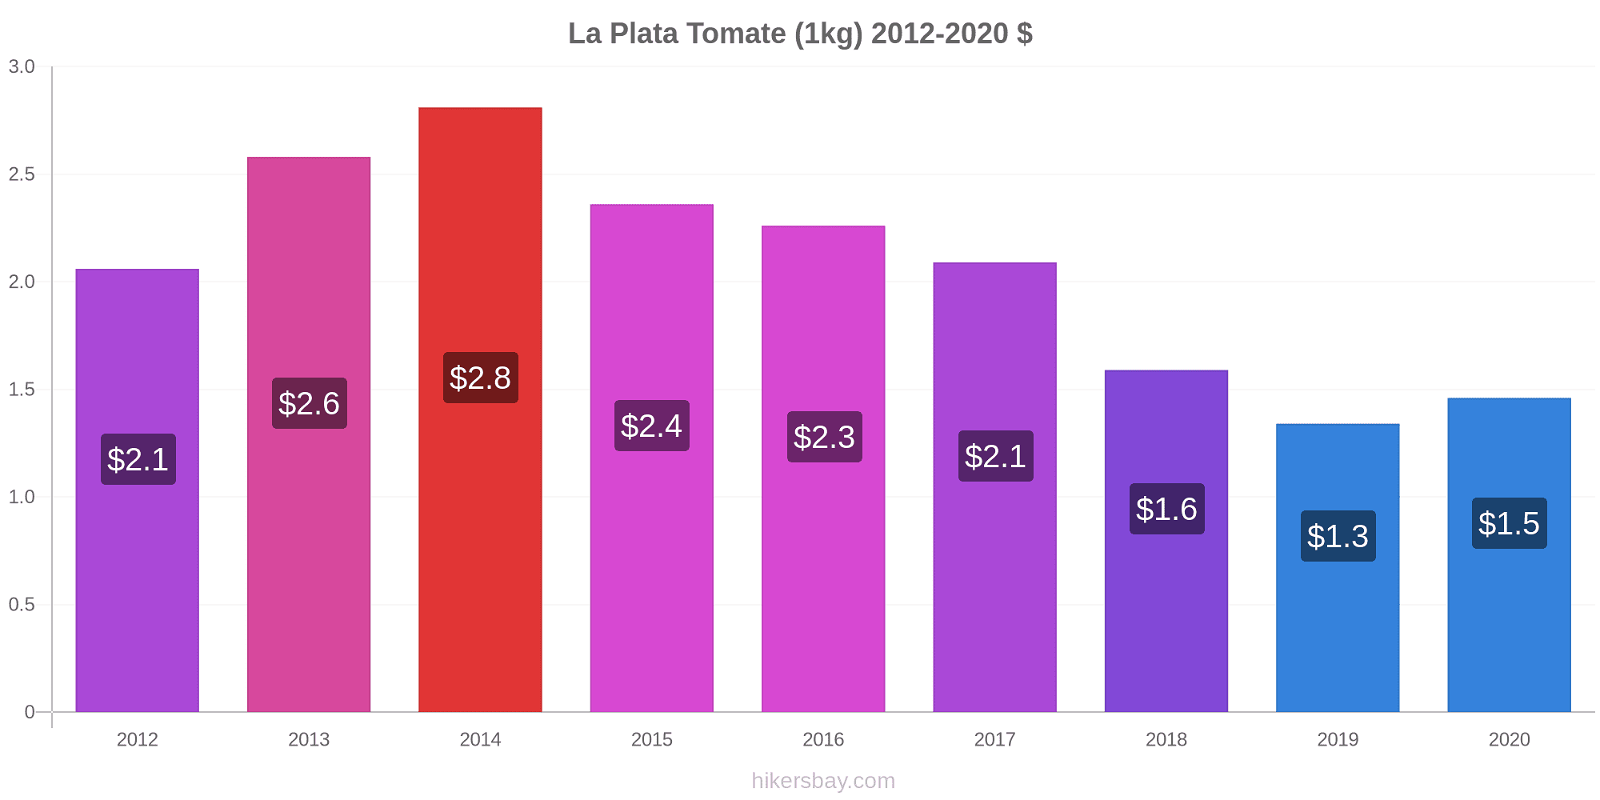 La Plata changements de prix Tomate (1kg) hikersbay.com